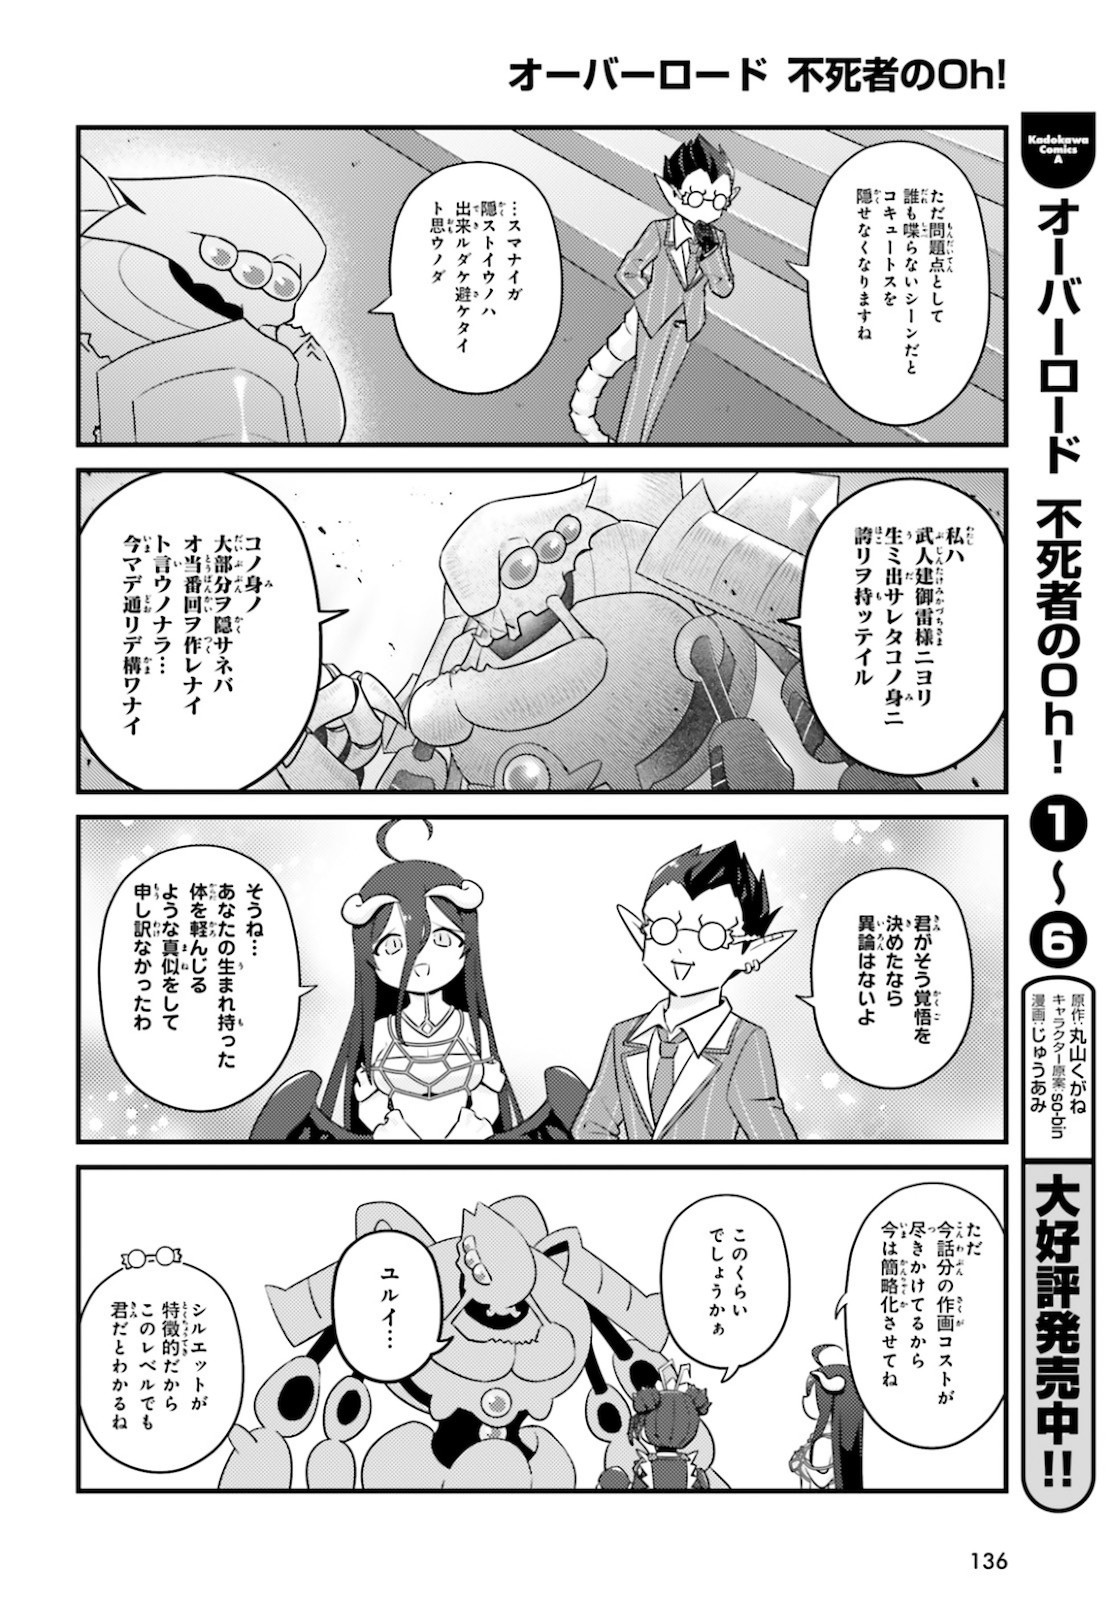 Overlord-Fushisha-no-Oh - Chapter 42 - Page 18